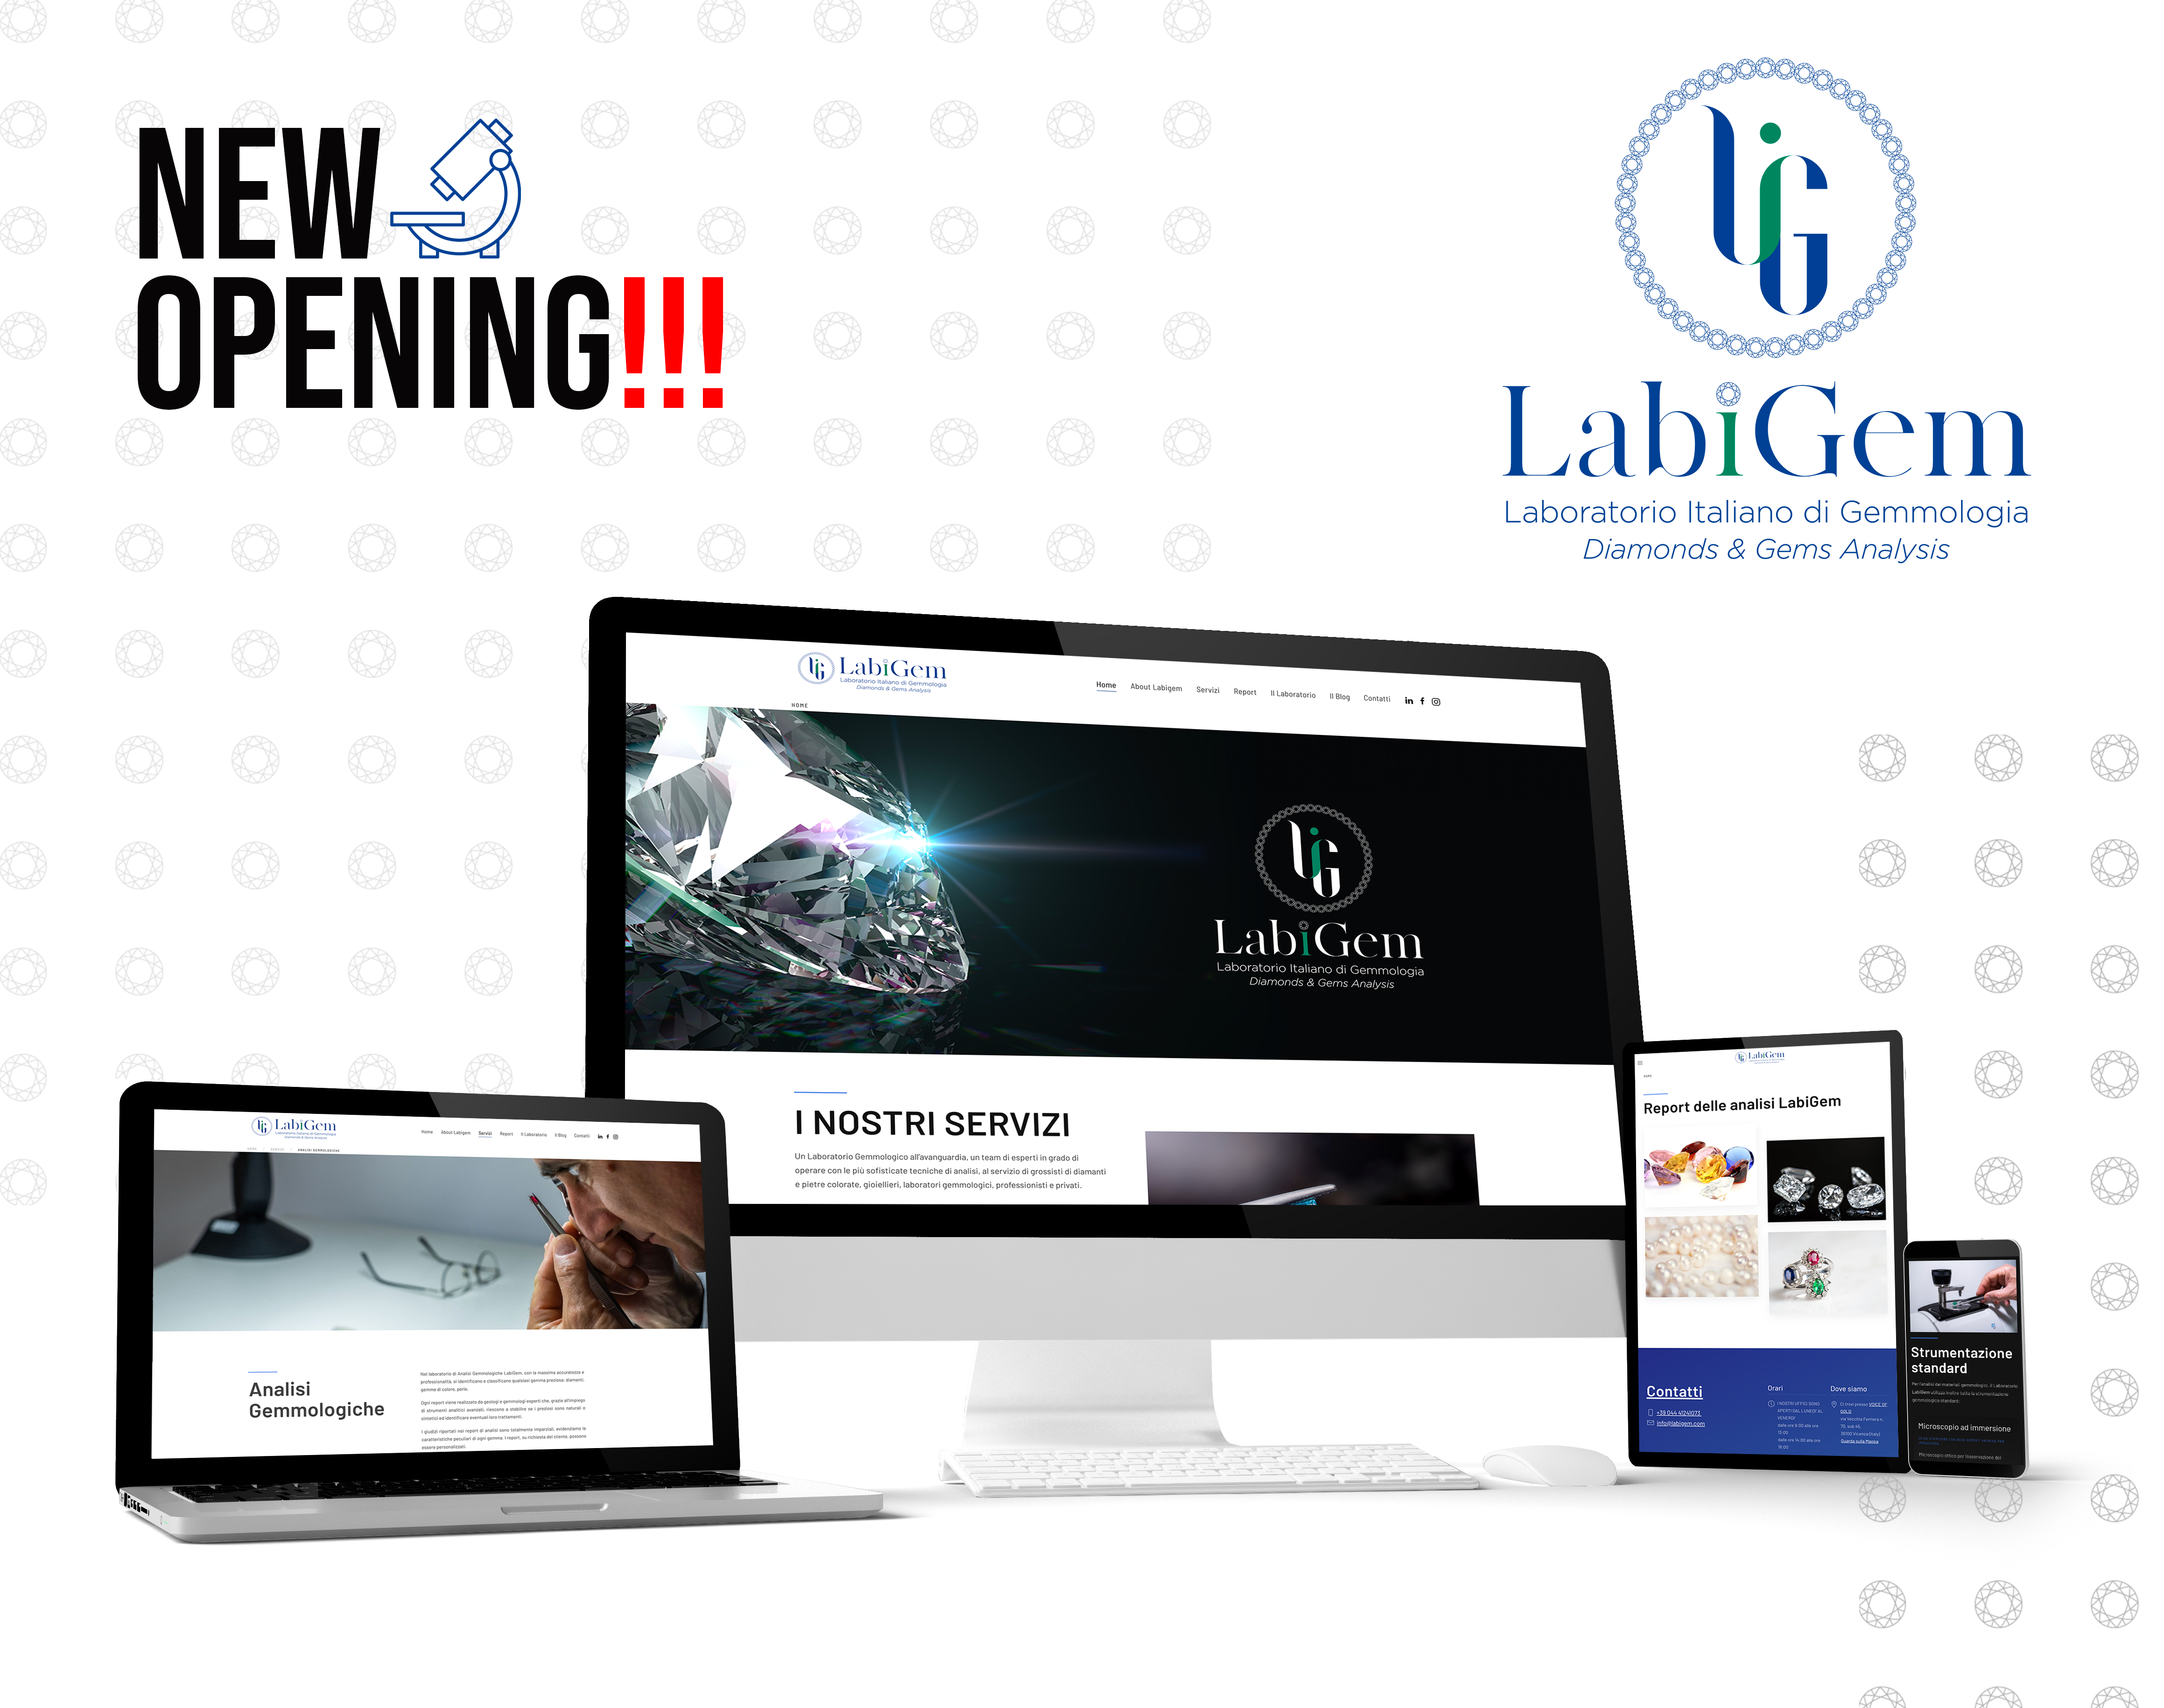 lancio nuovo sito web labigem